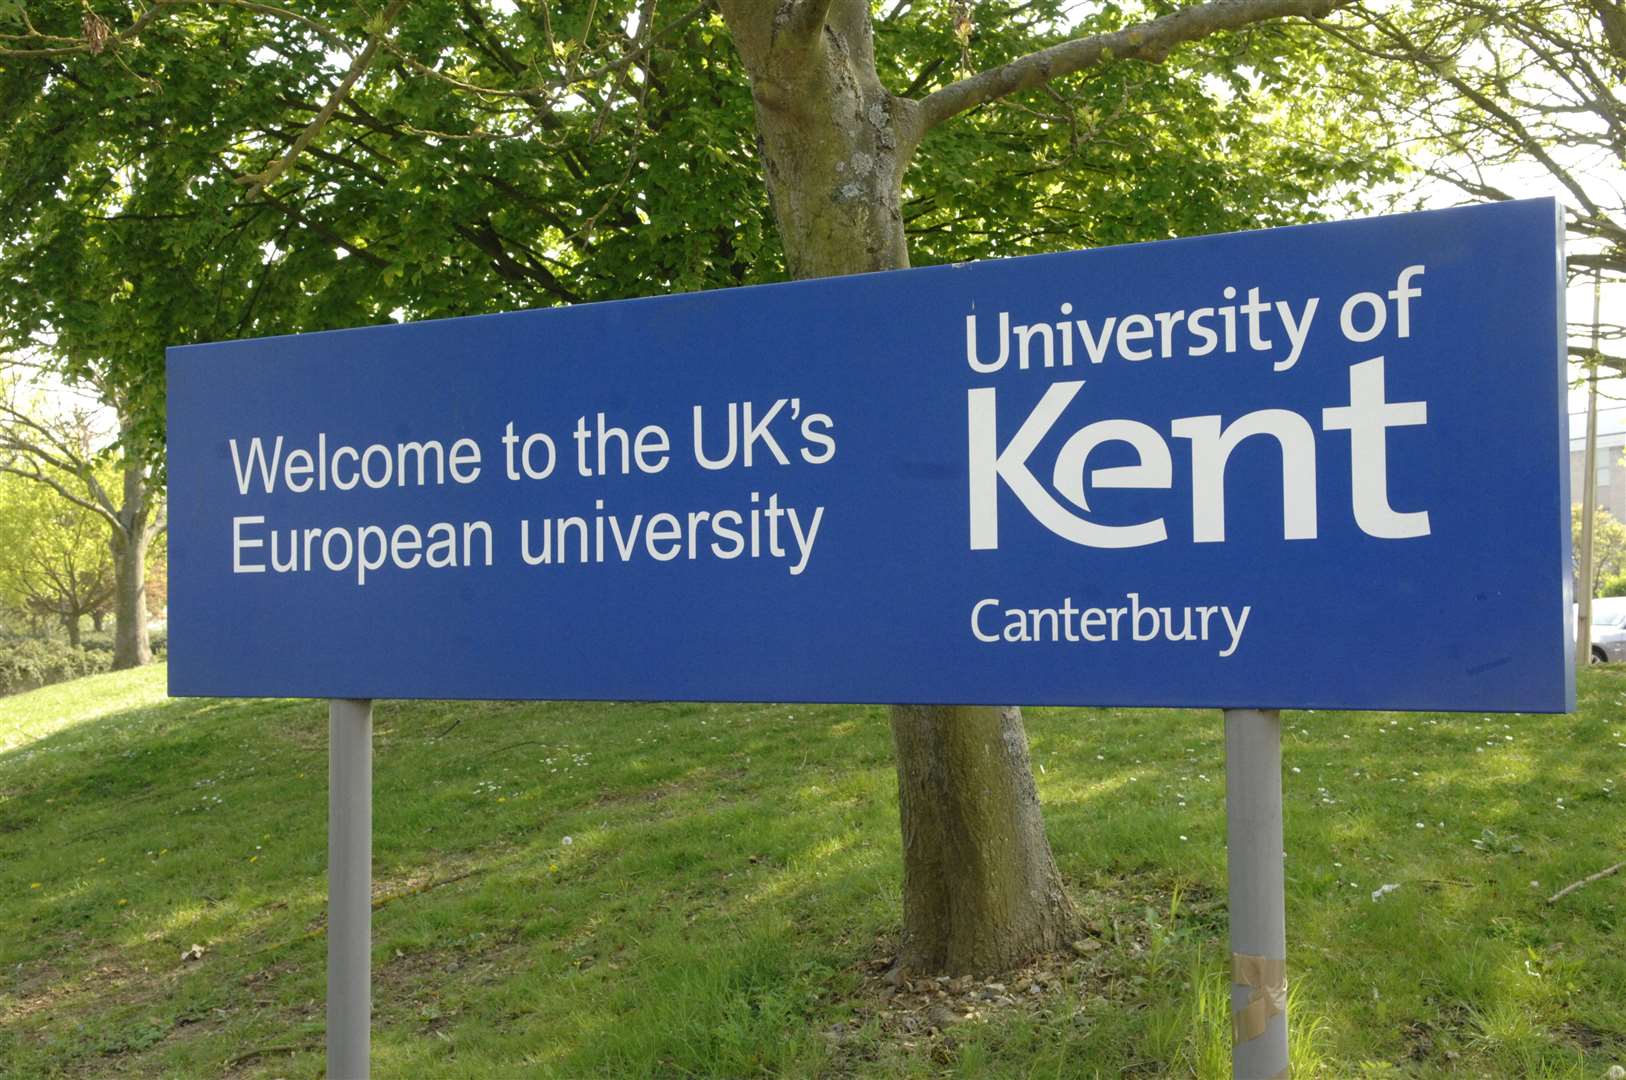 The University of Kent at Canterbury